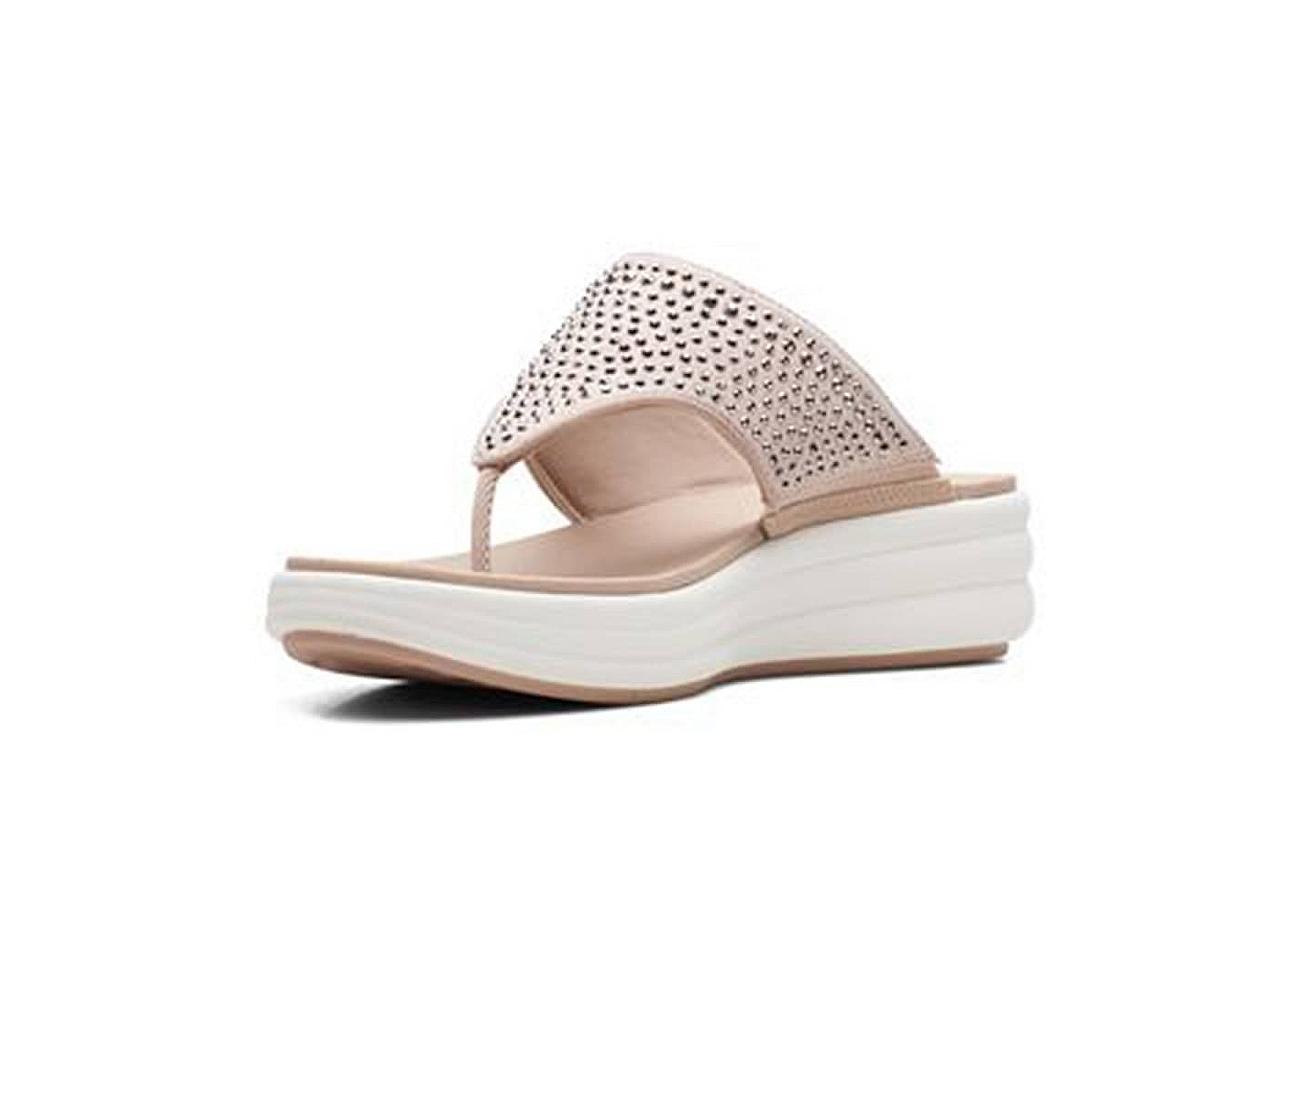 Clarks Women's Manilla Bonita Beige Fashion Sandals - 8 UK/India (42 EU) :  Amazon.in: Shoes & Handbags